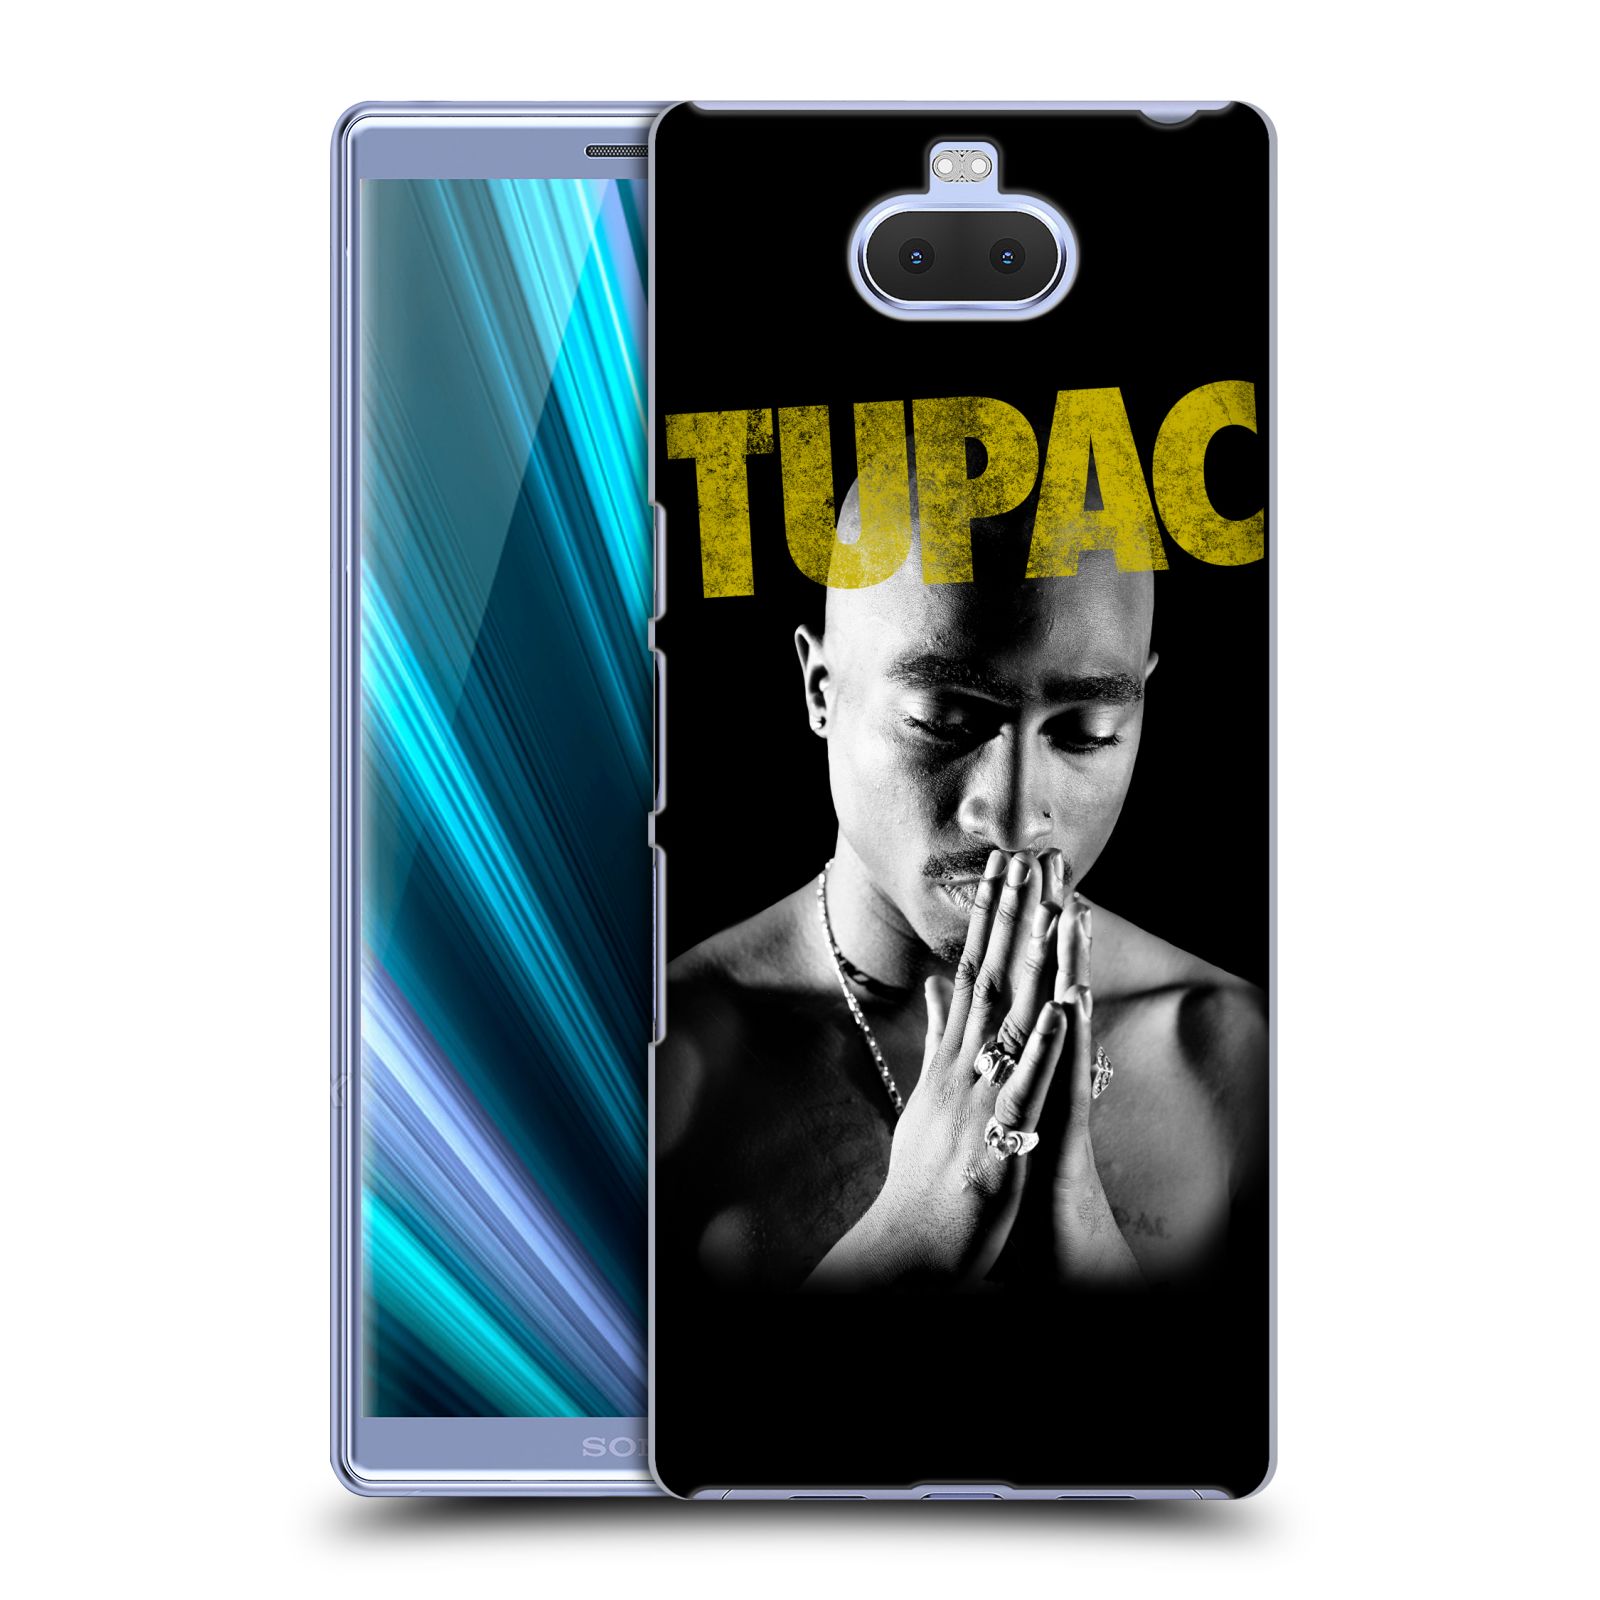 Pouzdro na mobil Sony Xperia 10 Plus - Head Case - Zpěvák rapper Tupac Shakur 2Pac zlatý nadpis